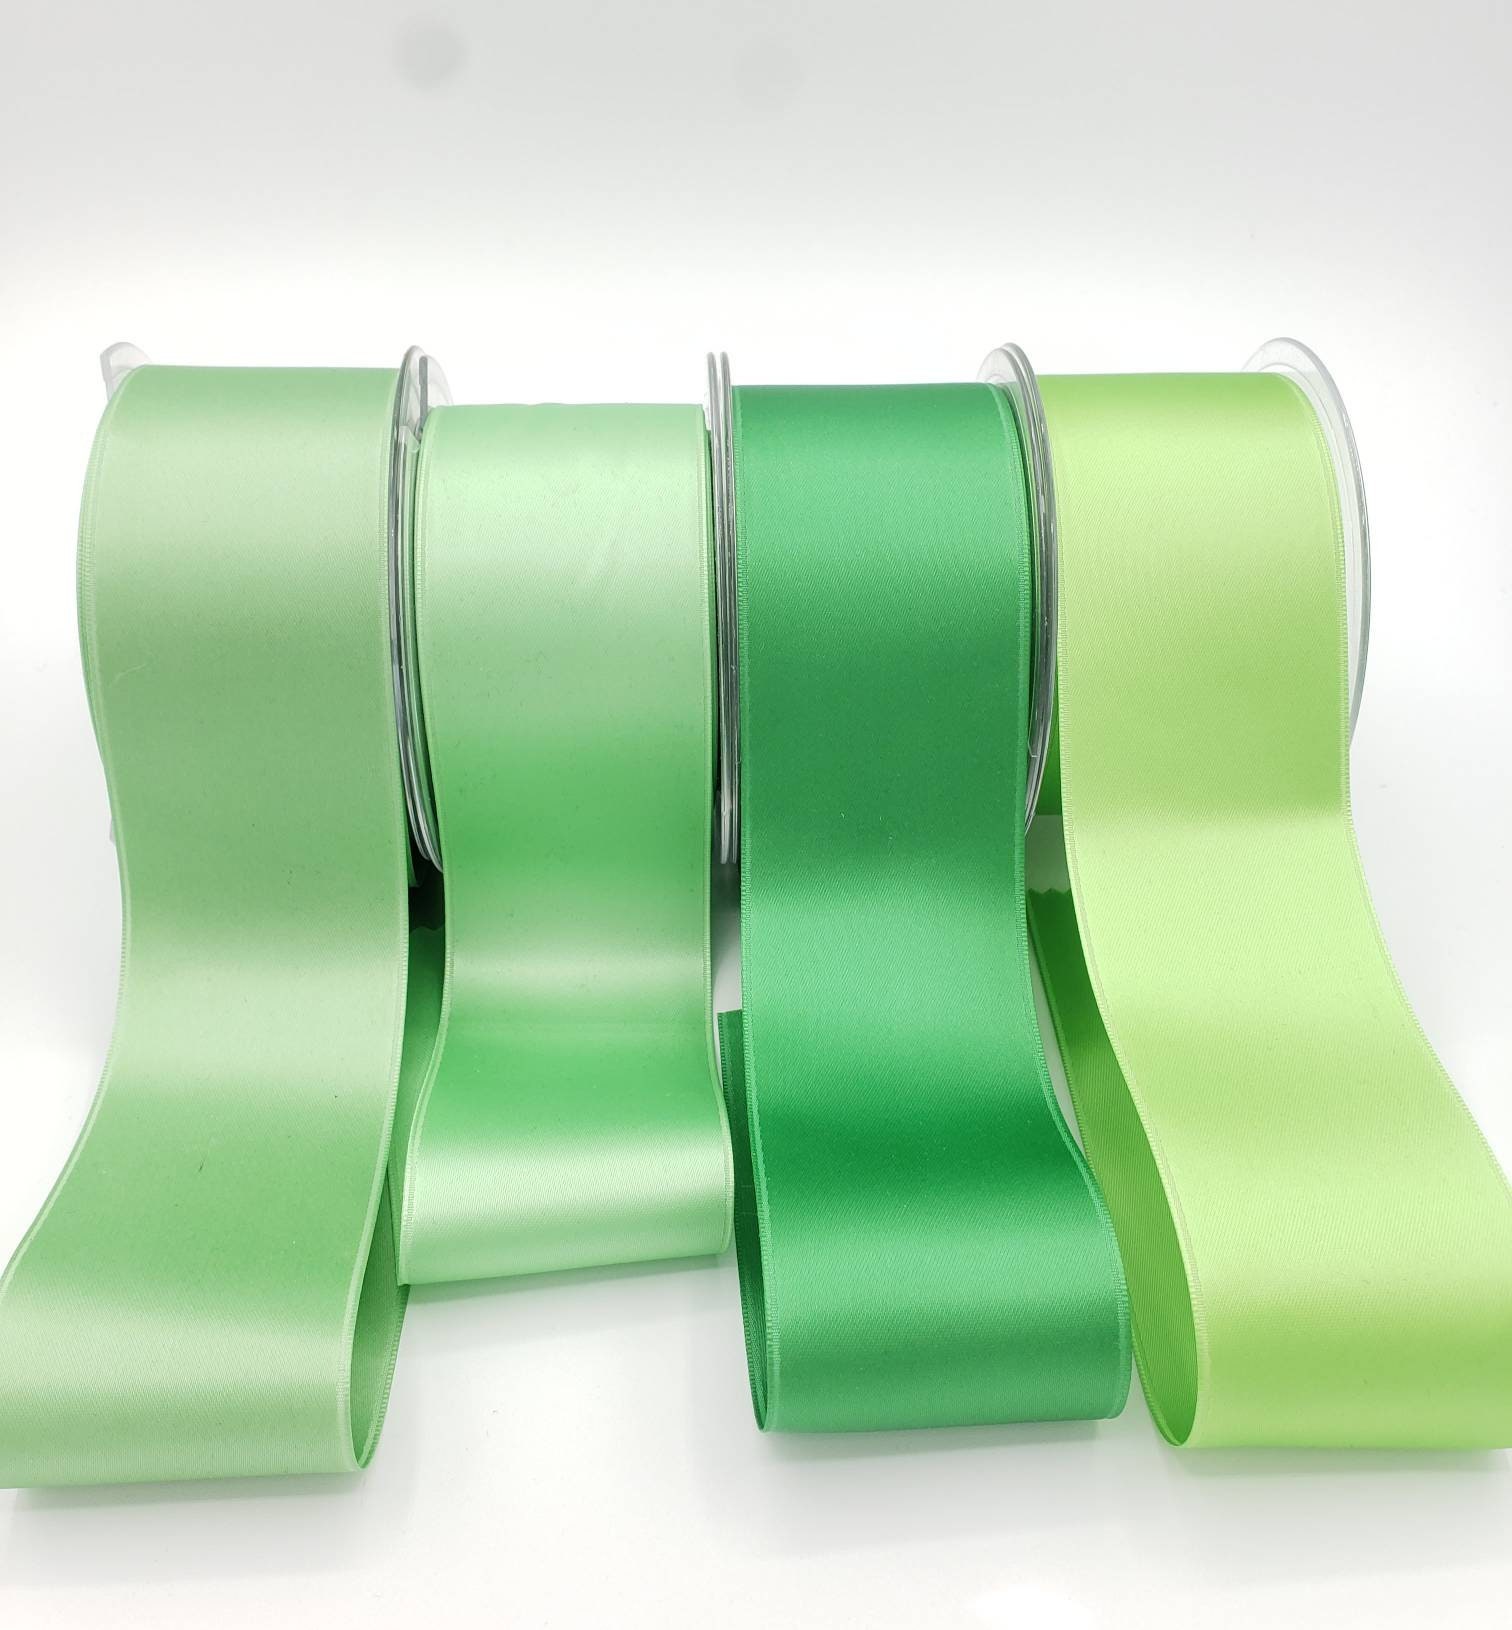 Light Green Ribbon Double Sided Satin Ribbon High Quality Light